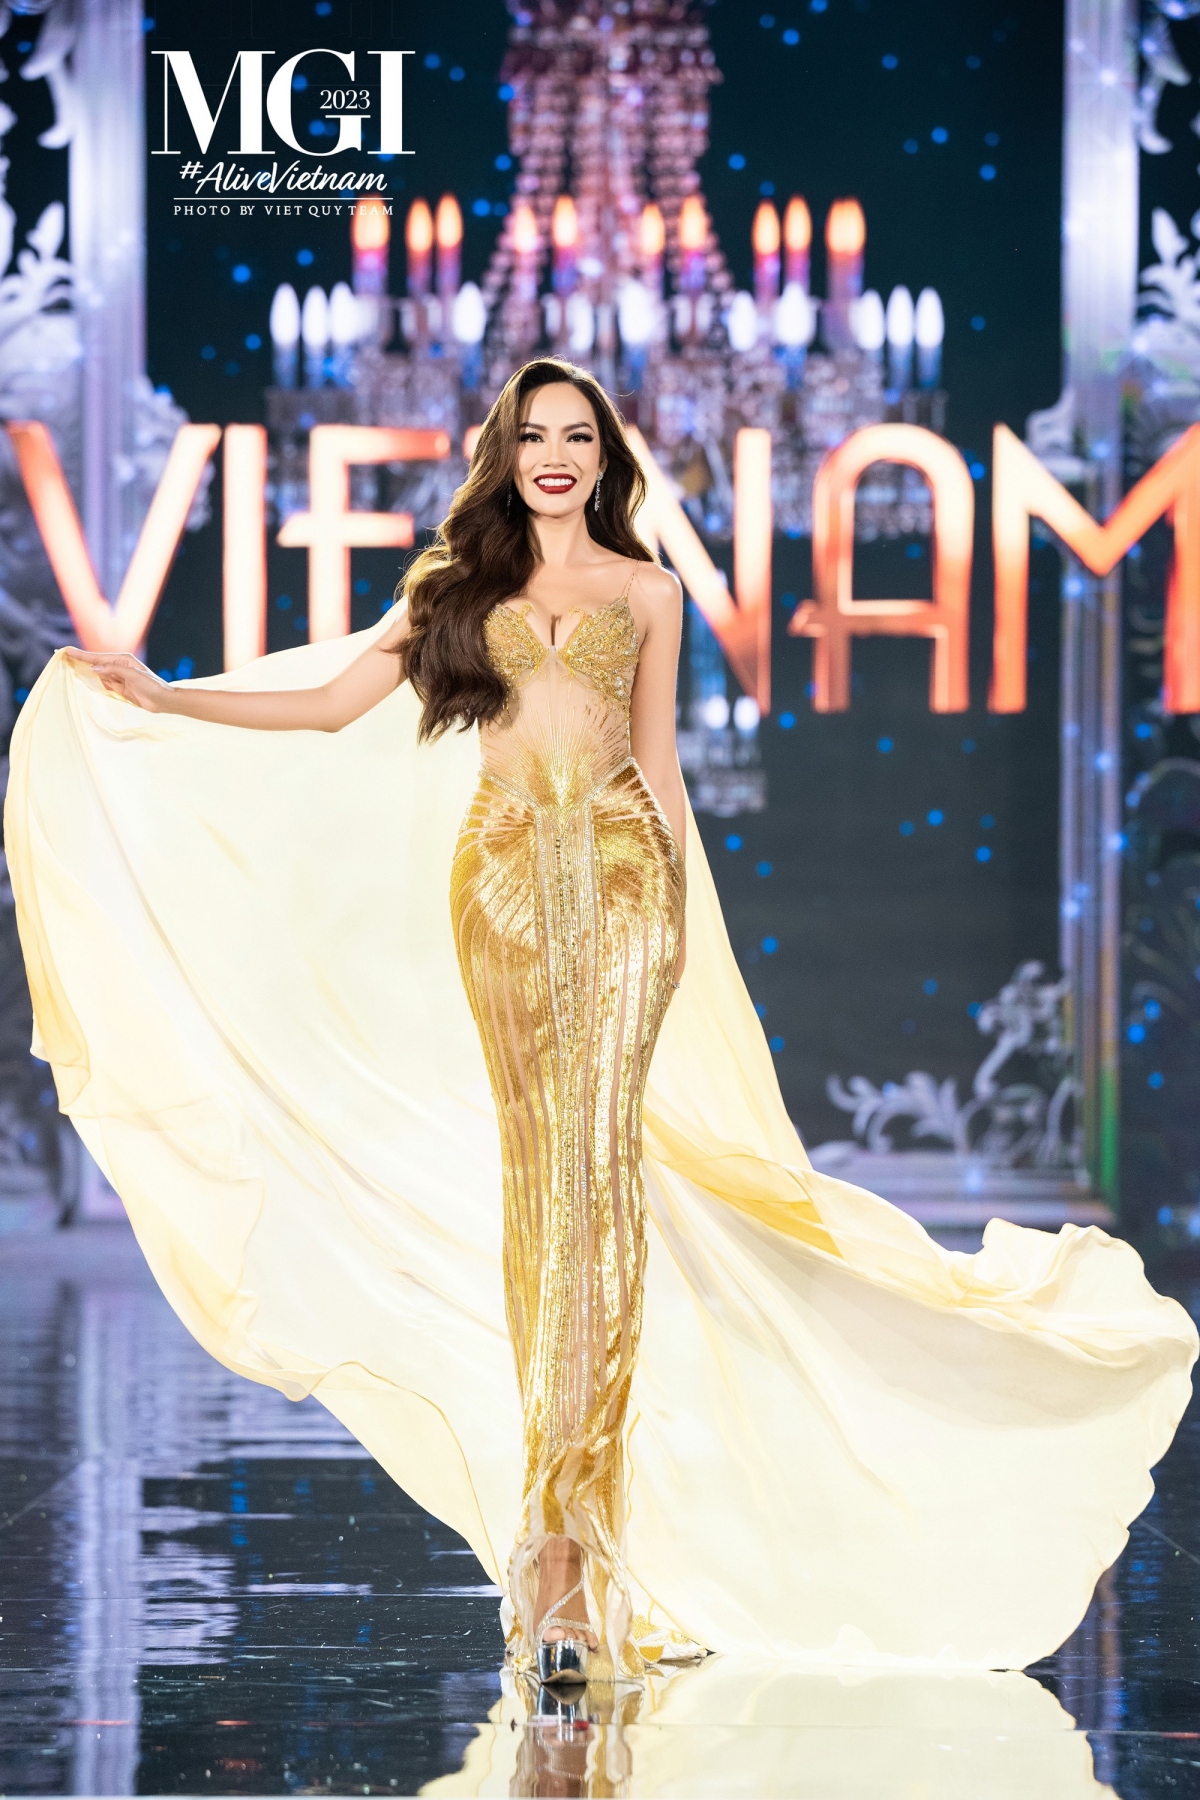 Vietexplorer.com - Vietnamese beauty shines in MGI 2023 Top 10 Swimsuit ...